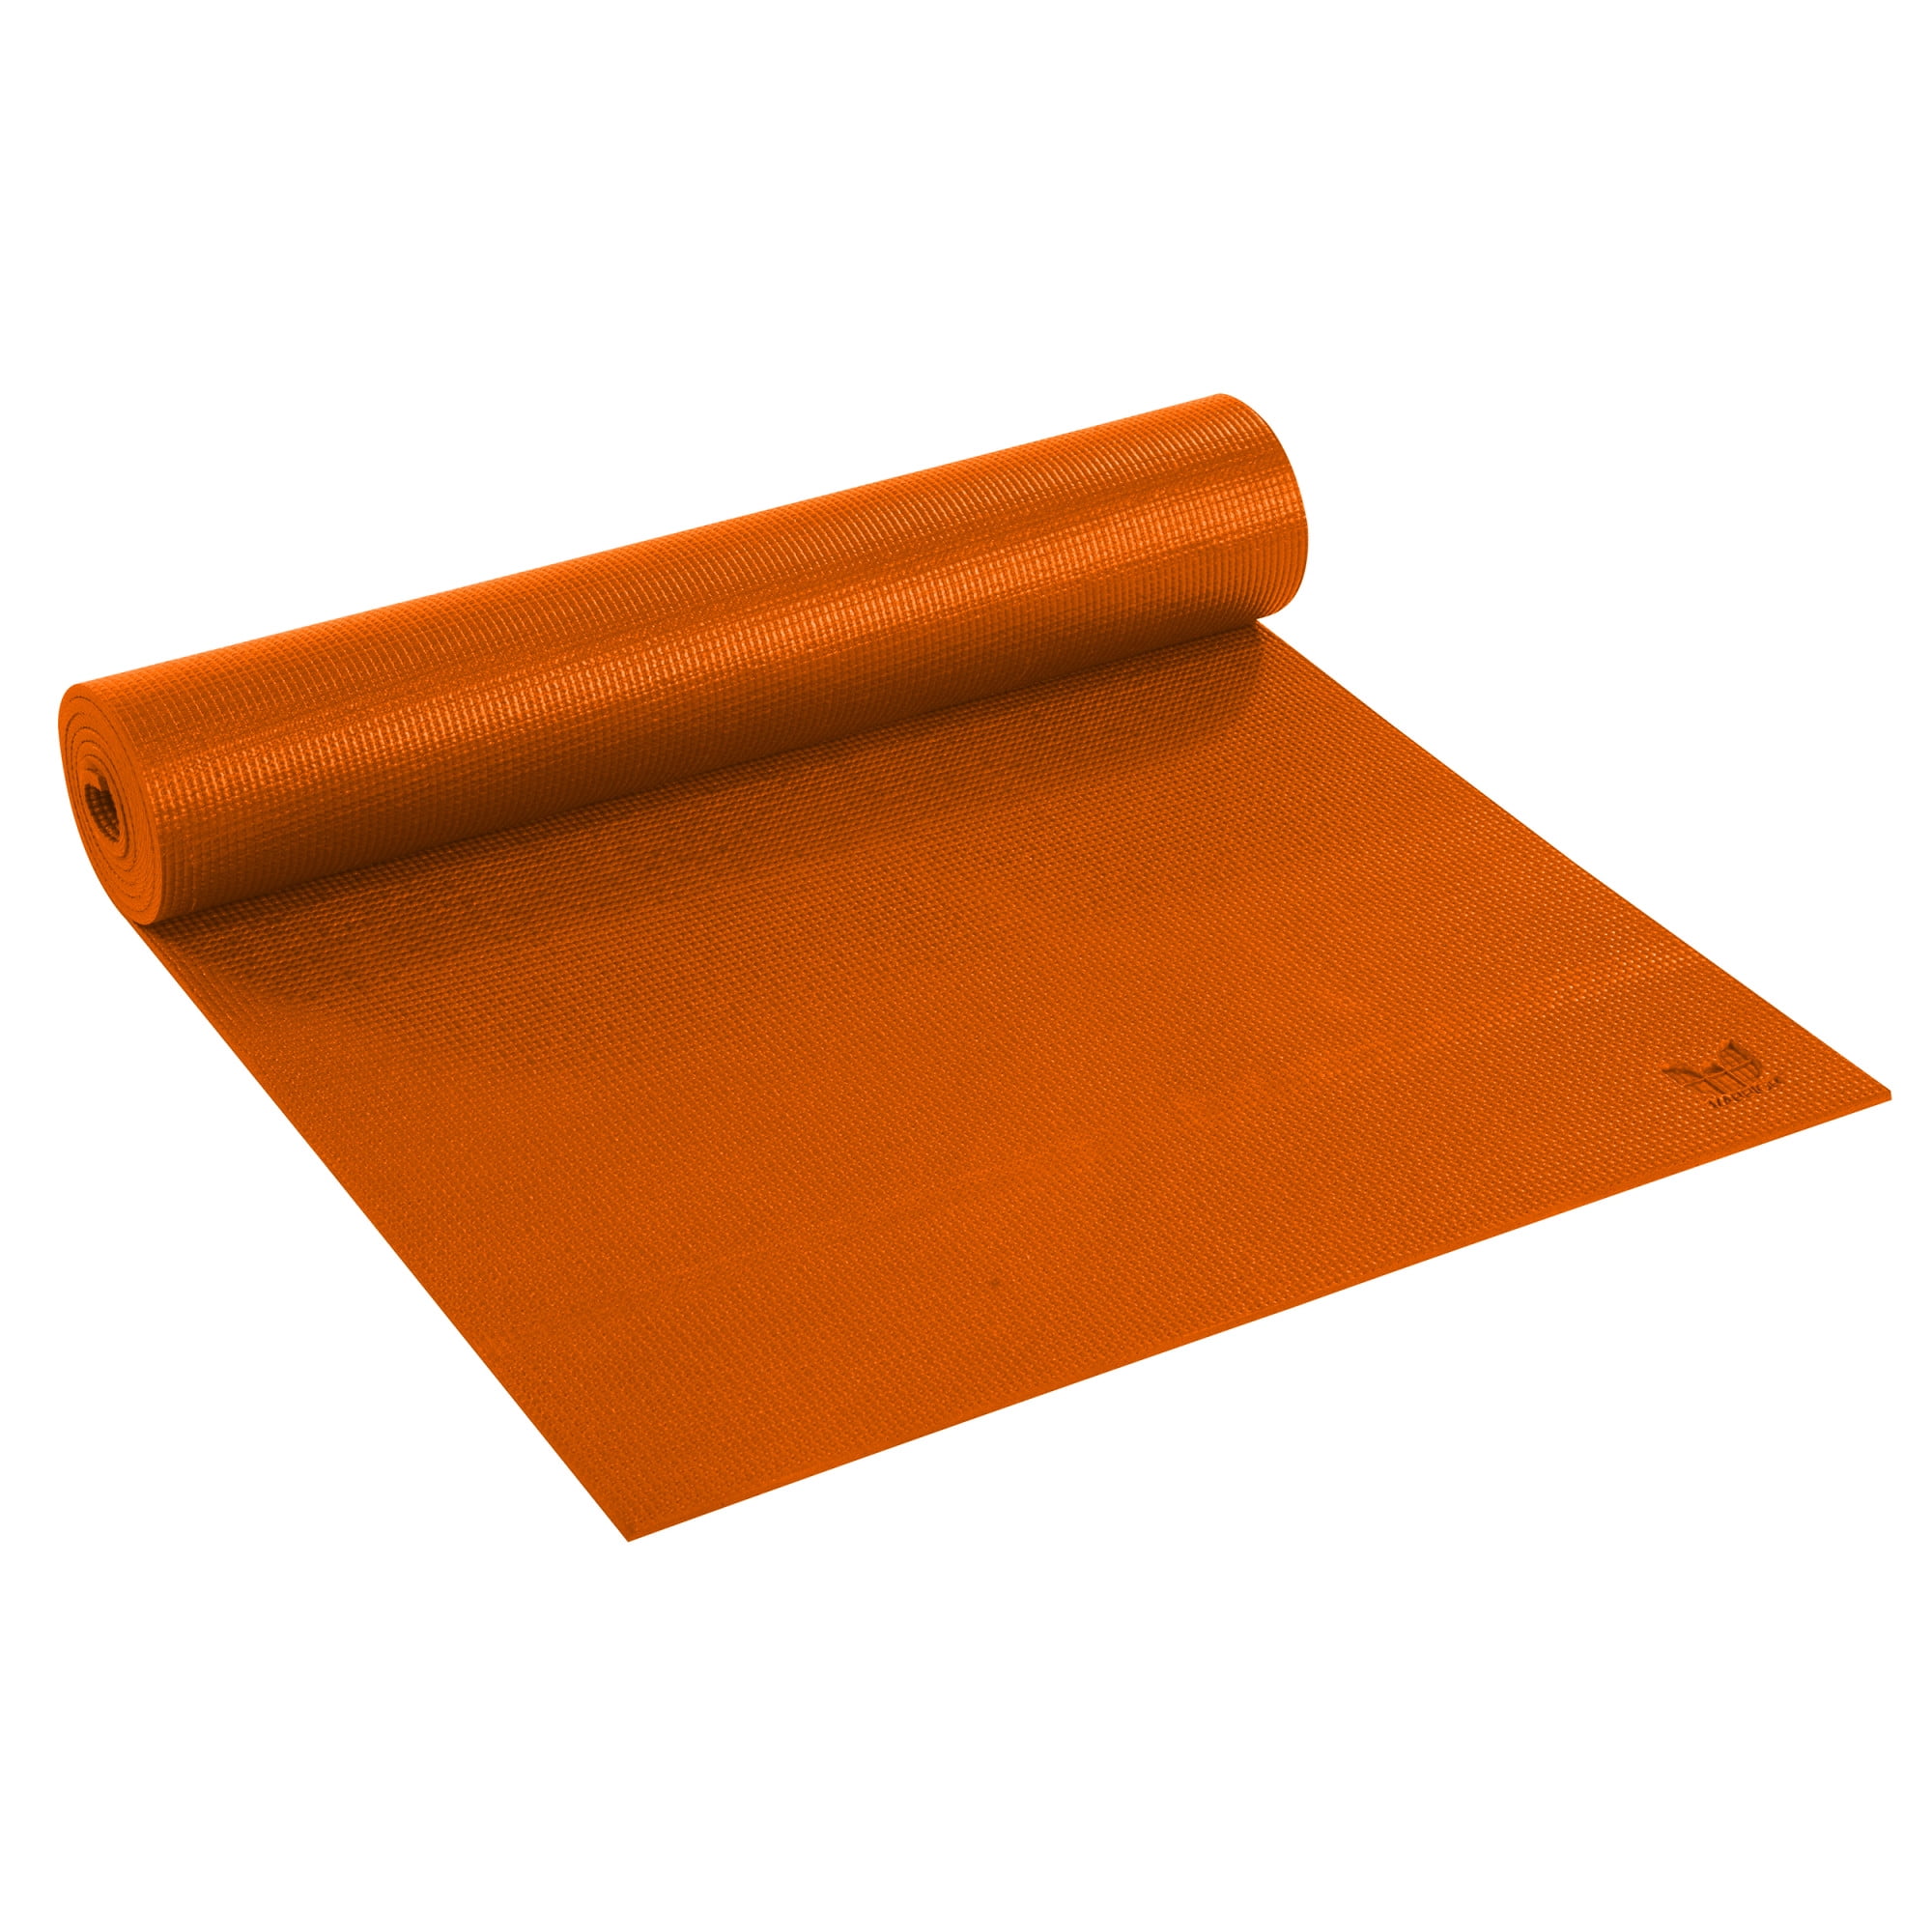 Menstruatie Verwant betaling Warrior Yoga Mat - Orange - 4mm x 24" W x 68" L - Walmart.com